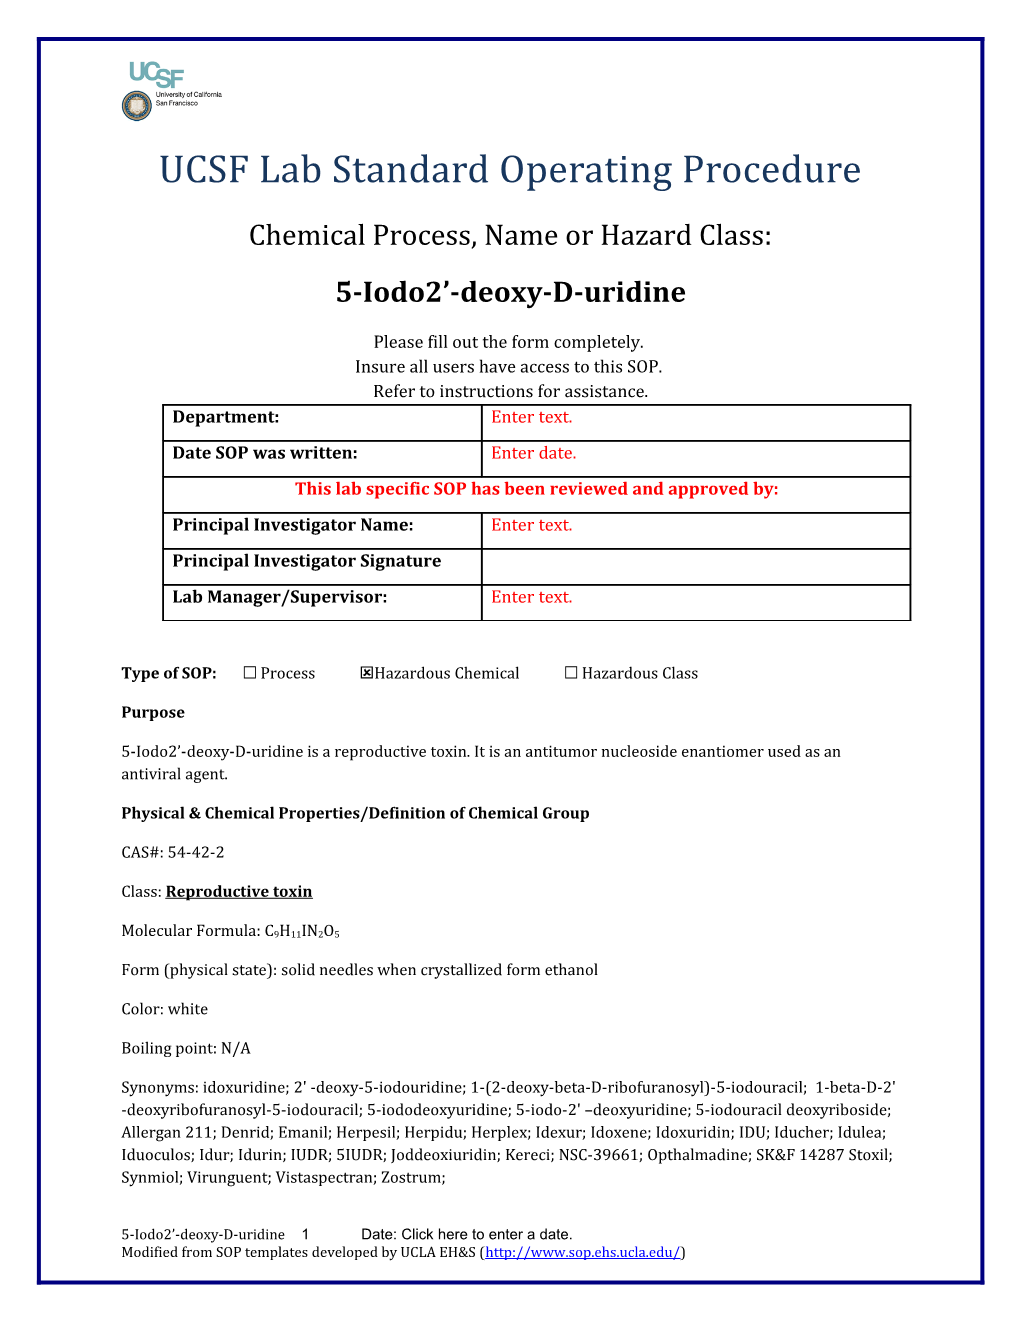 UCSF Lab Standard Operating Procedure s28